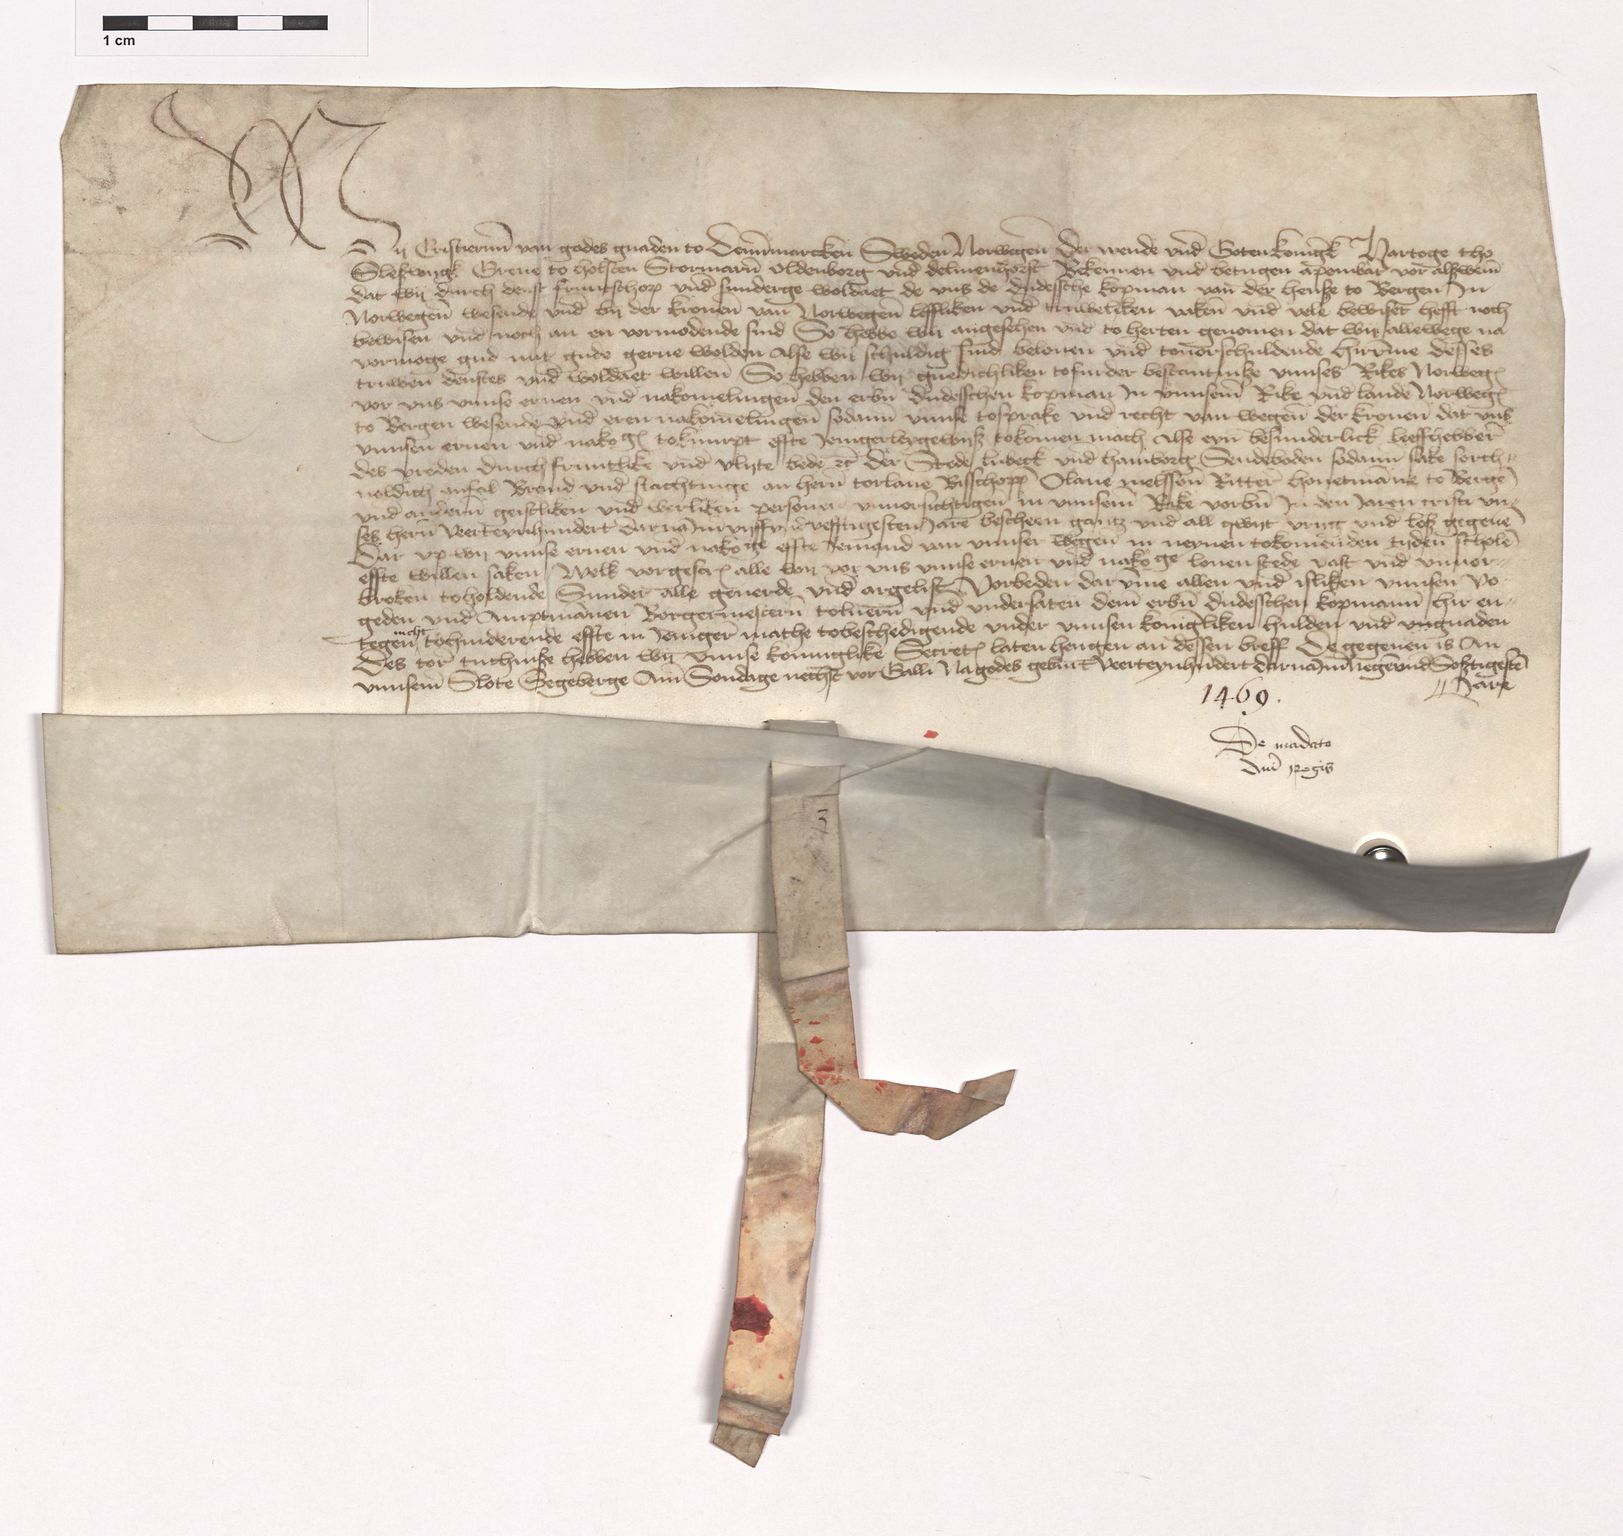 07.1 Urkunden, 3 Auswärtige Beziehungen (Externa), AHL/-/21: Norwegen (Norvagica); Kontor zu Bergen, 1247-1747, s. 763